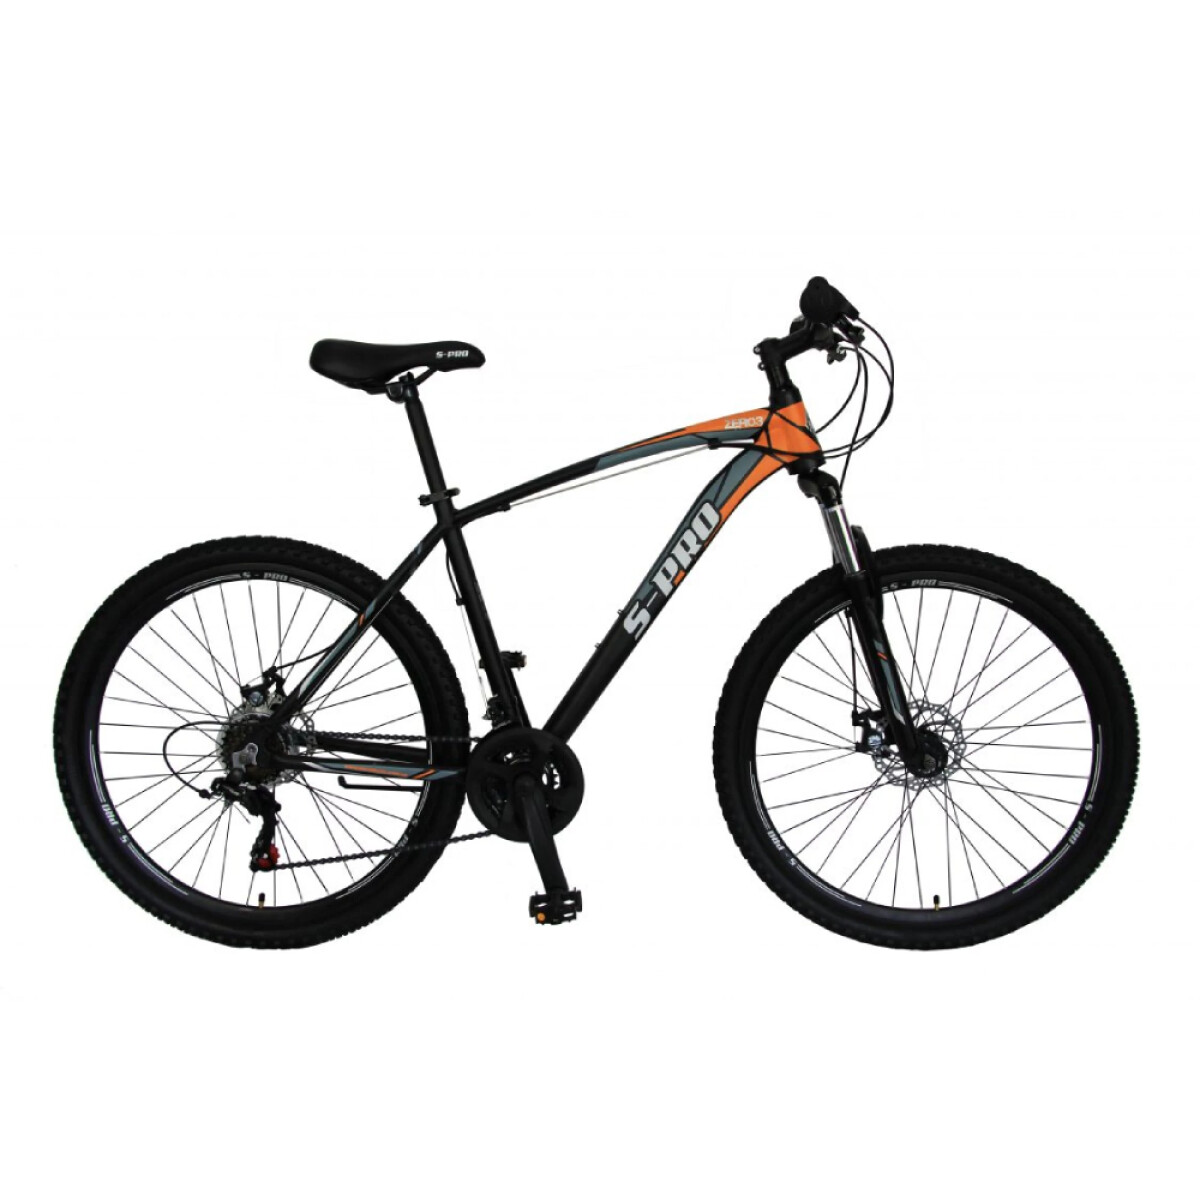 Bicicleta S-Pro Zero3 27.5 Man - Gris y Naranja 